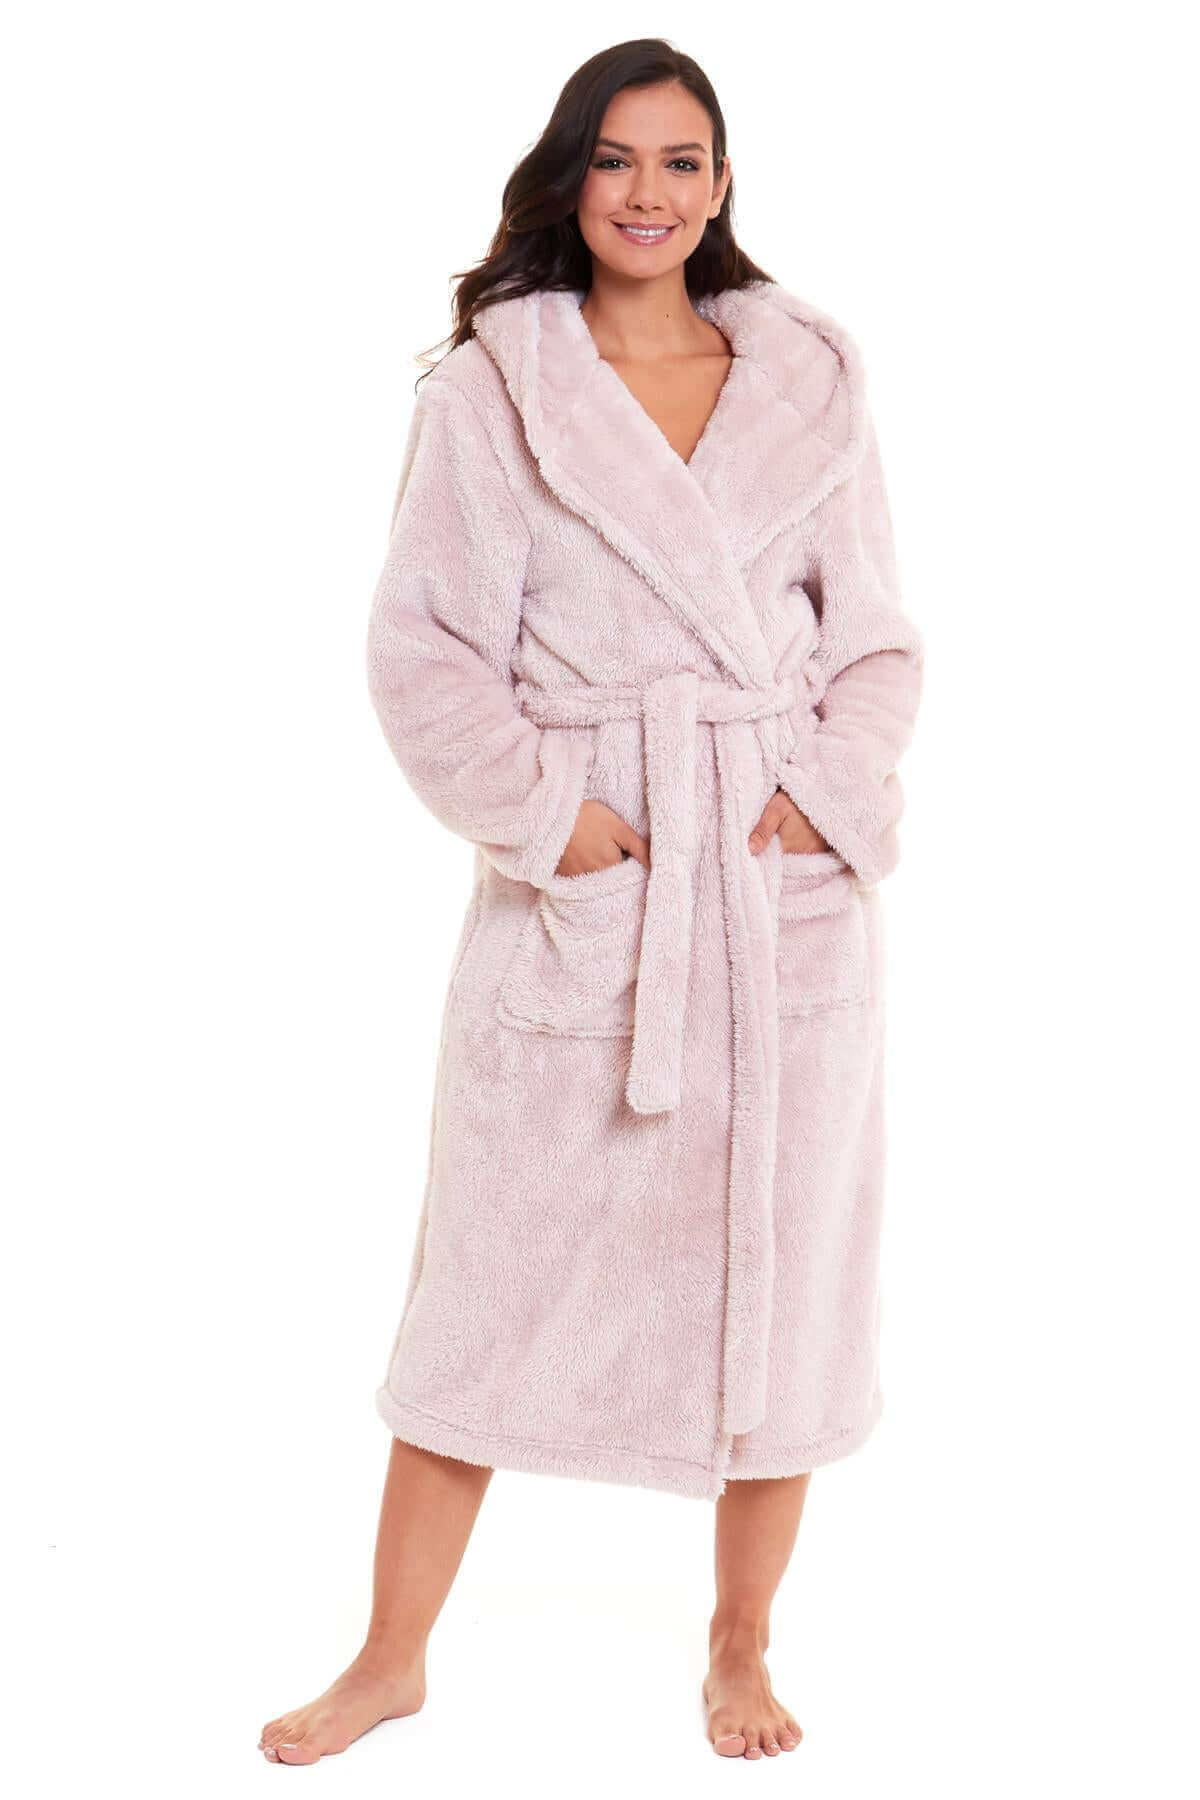 Women's Snuggle Fleece Dressing Gowns, Super Soft Velvet Touch Plush Bathrobes. Buy now for £25.00. A Robe by Daisy Dreamer. 12-14, 14-16, 16-18, 20-22, 8-10, bathrobe, bathwrap, bridesmaid, comfortable, cream, cuddly, daisy dreamer, dressing gown, elasti